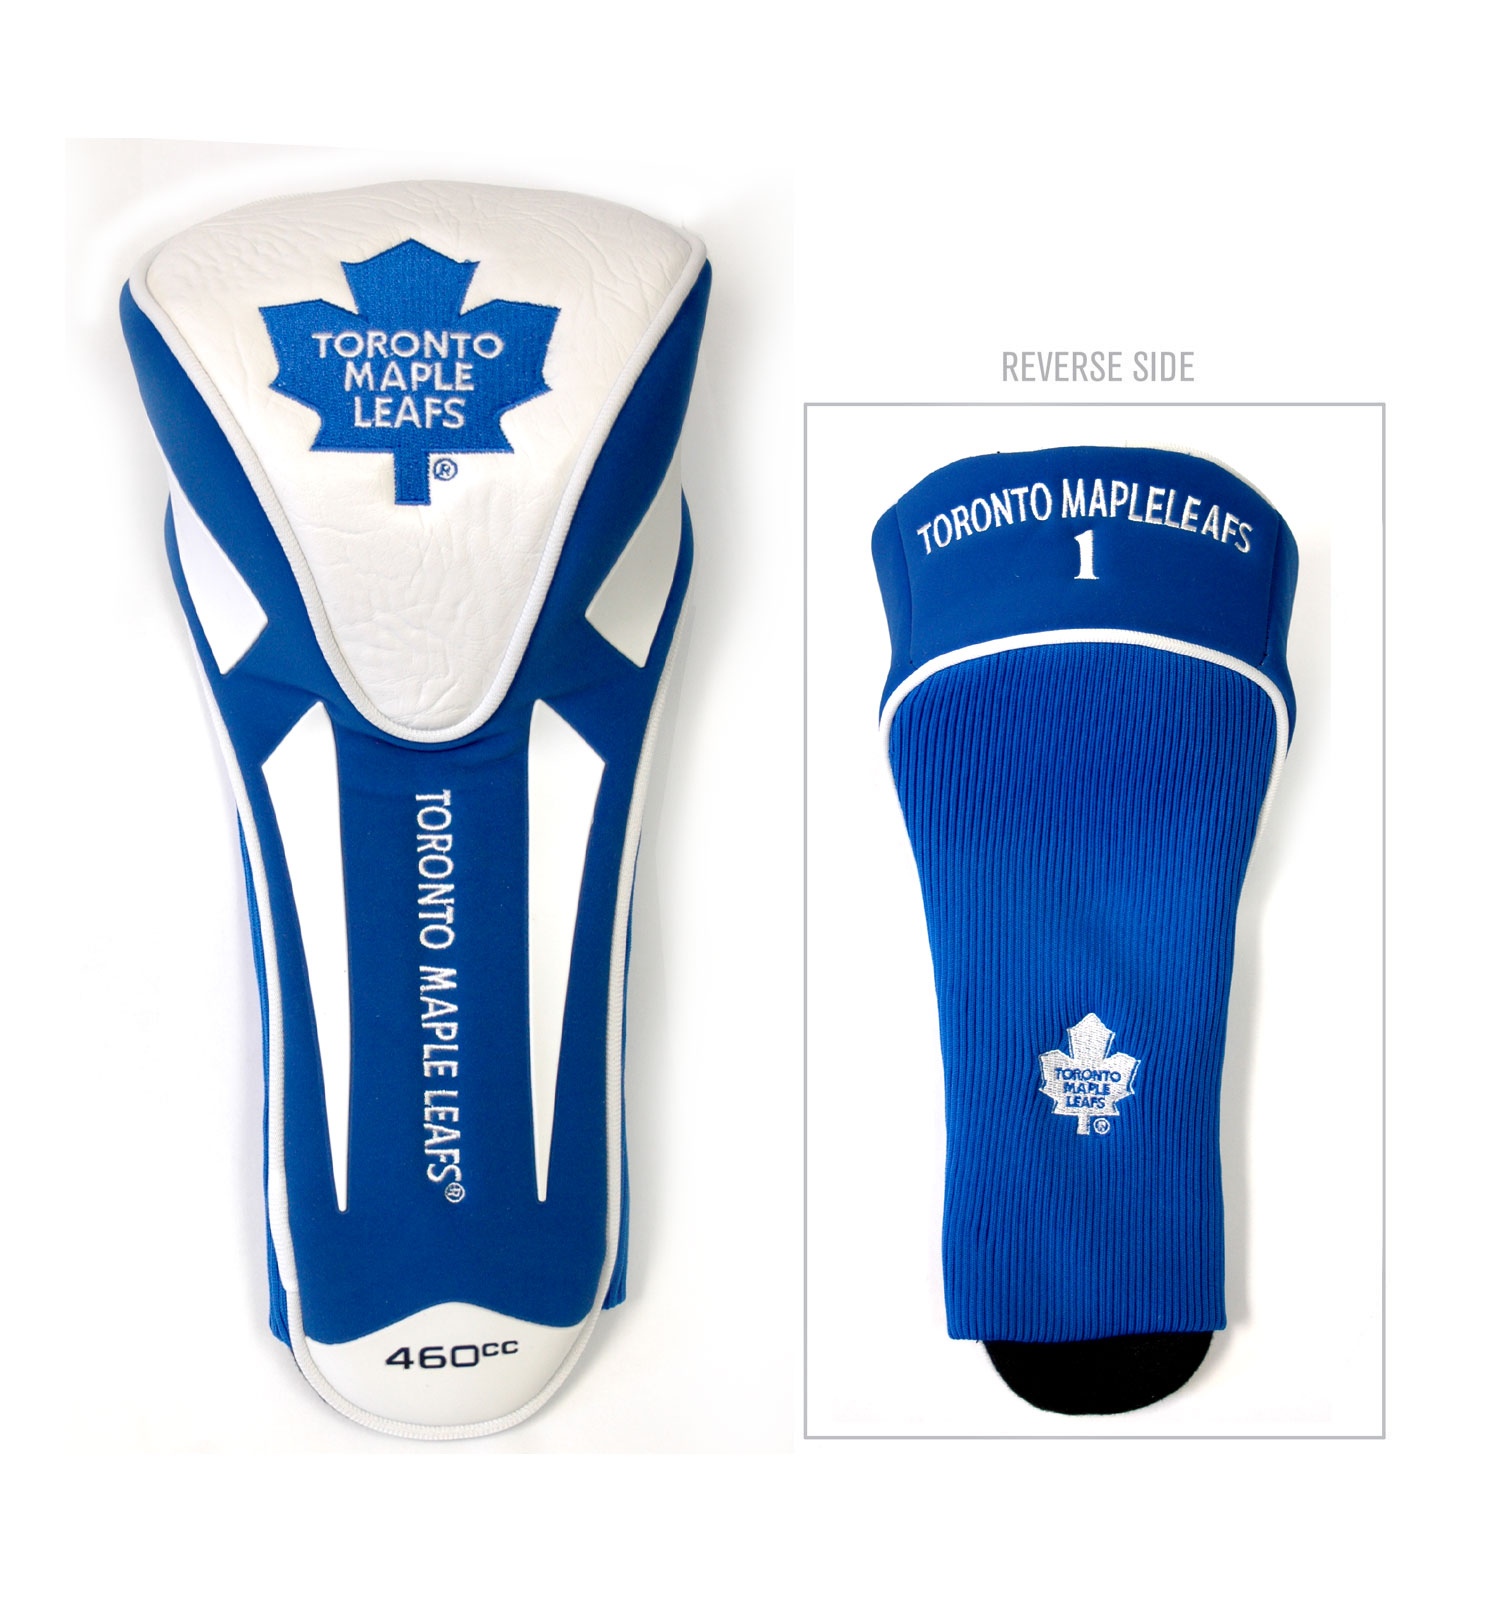 Toronto Maple Leafs APEX Headcover